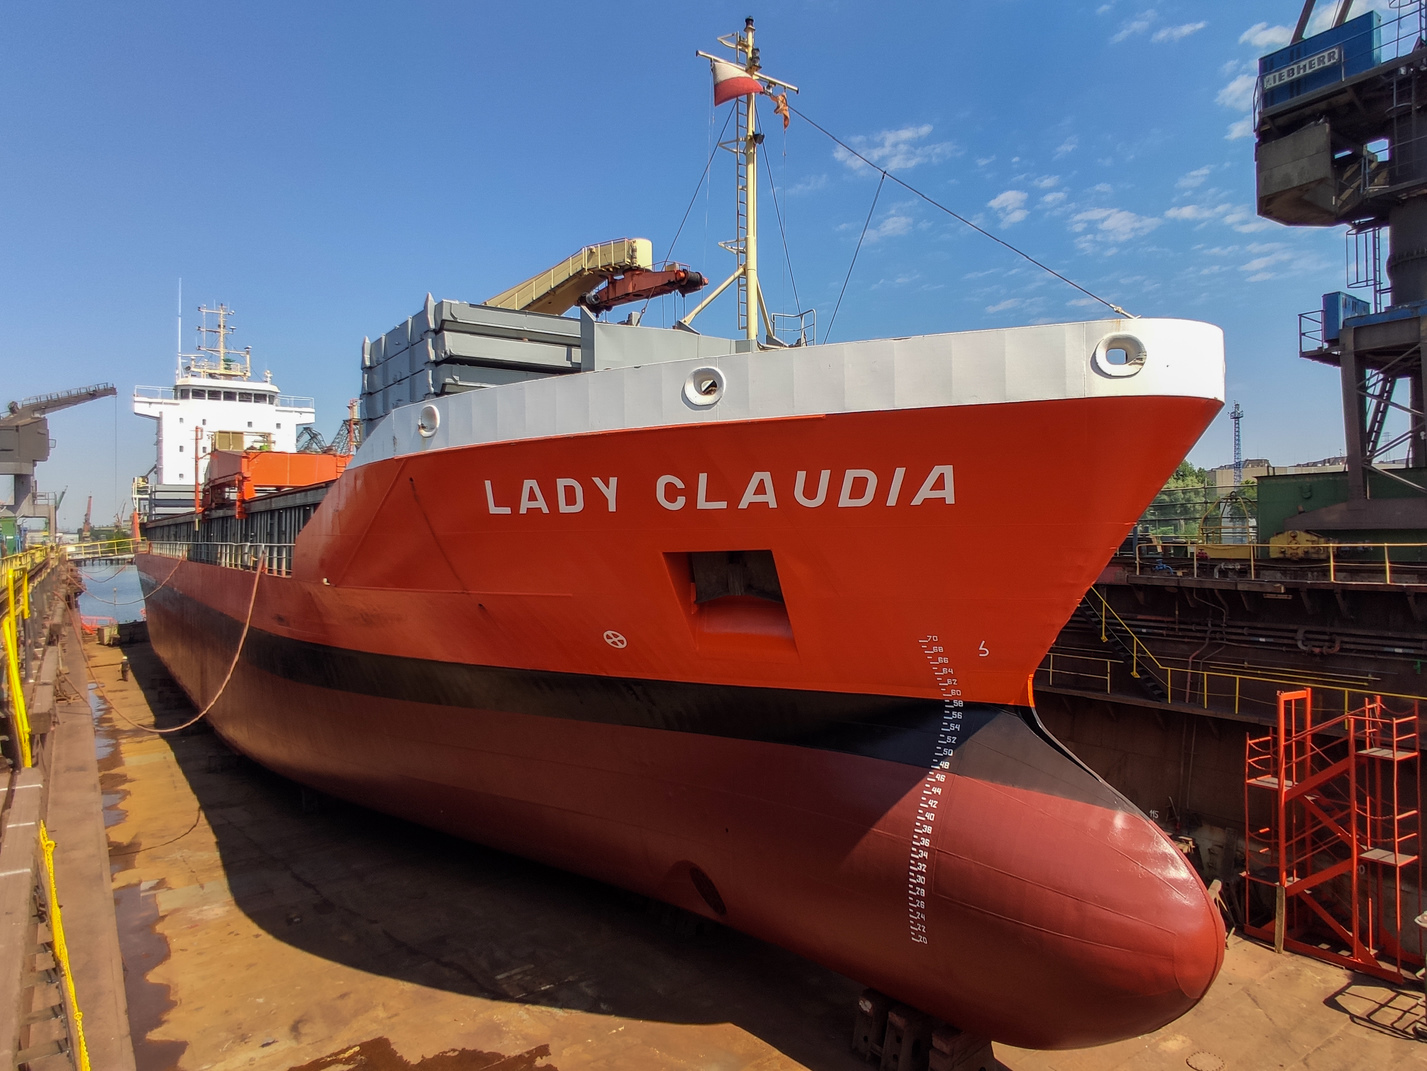 Lady Claudia